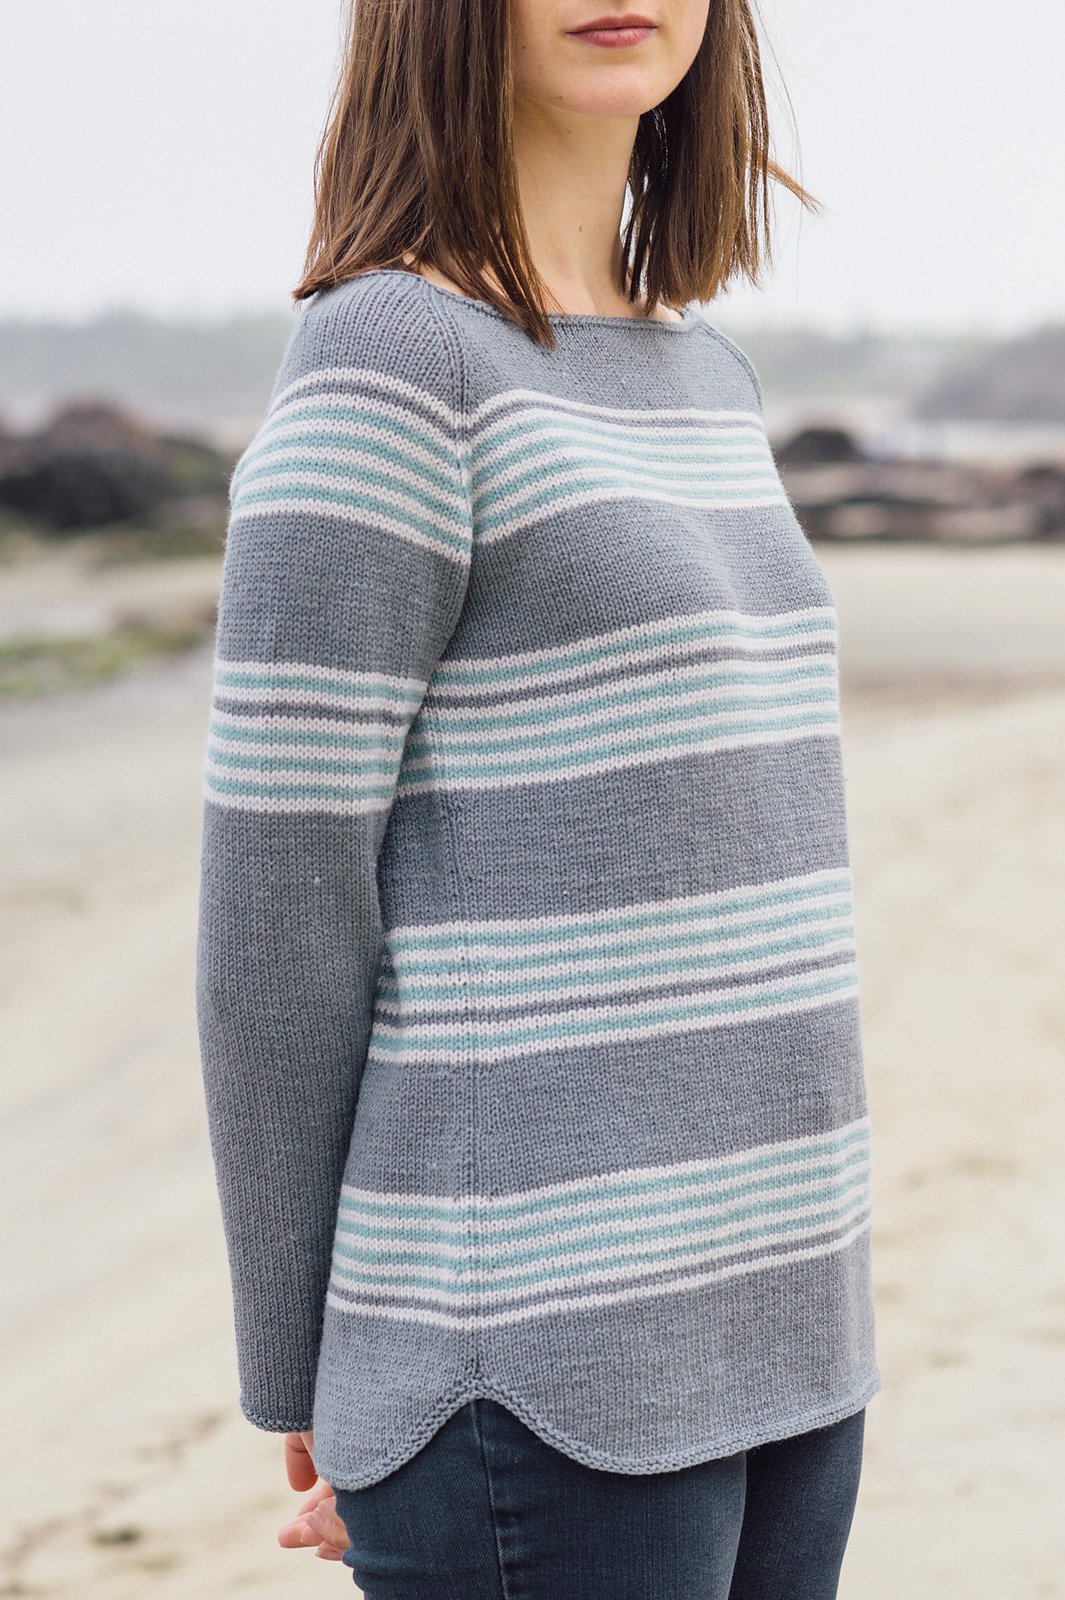 Пуловер реглан вязаный снизу.